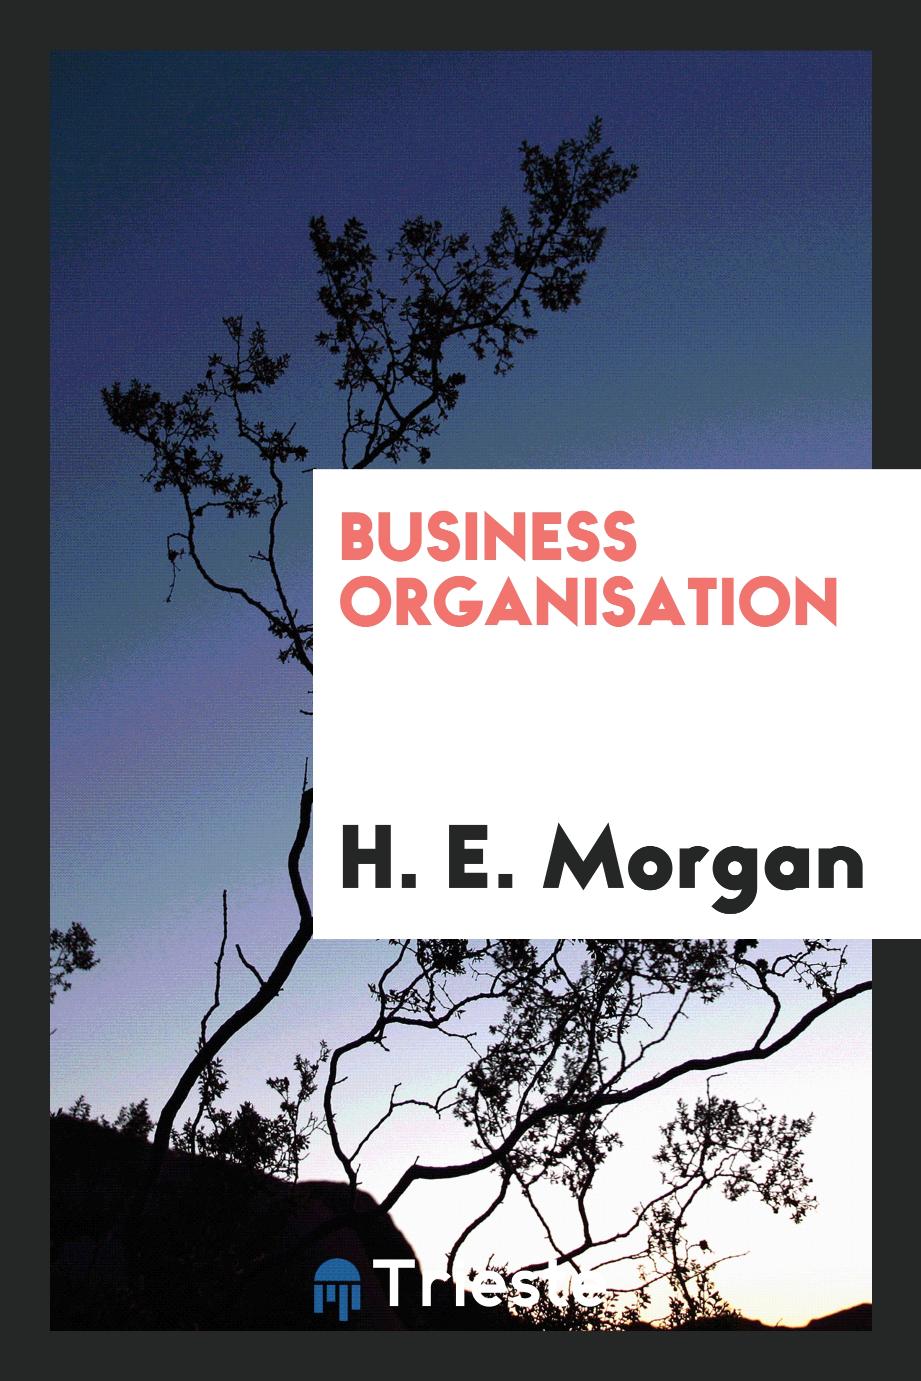 Business organisation